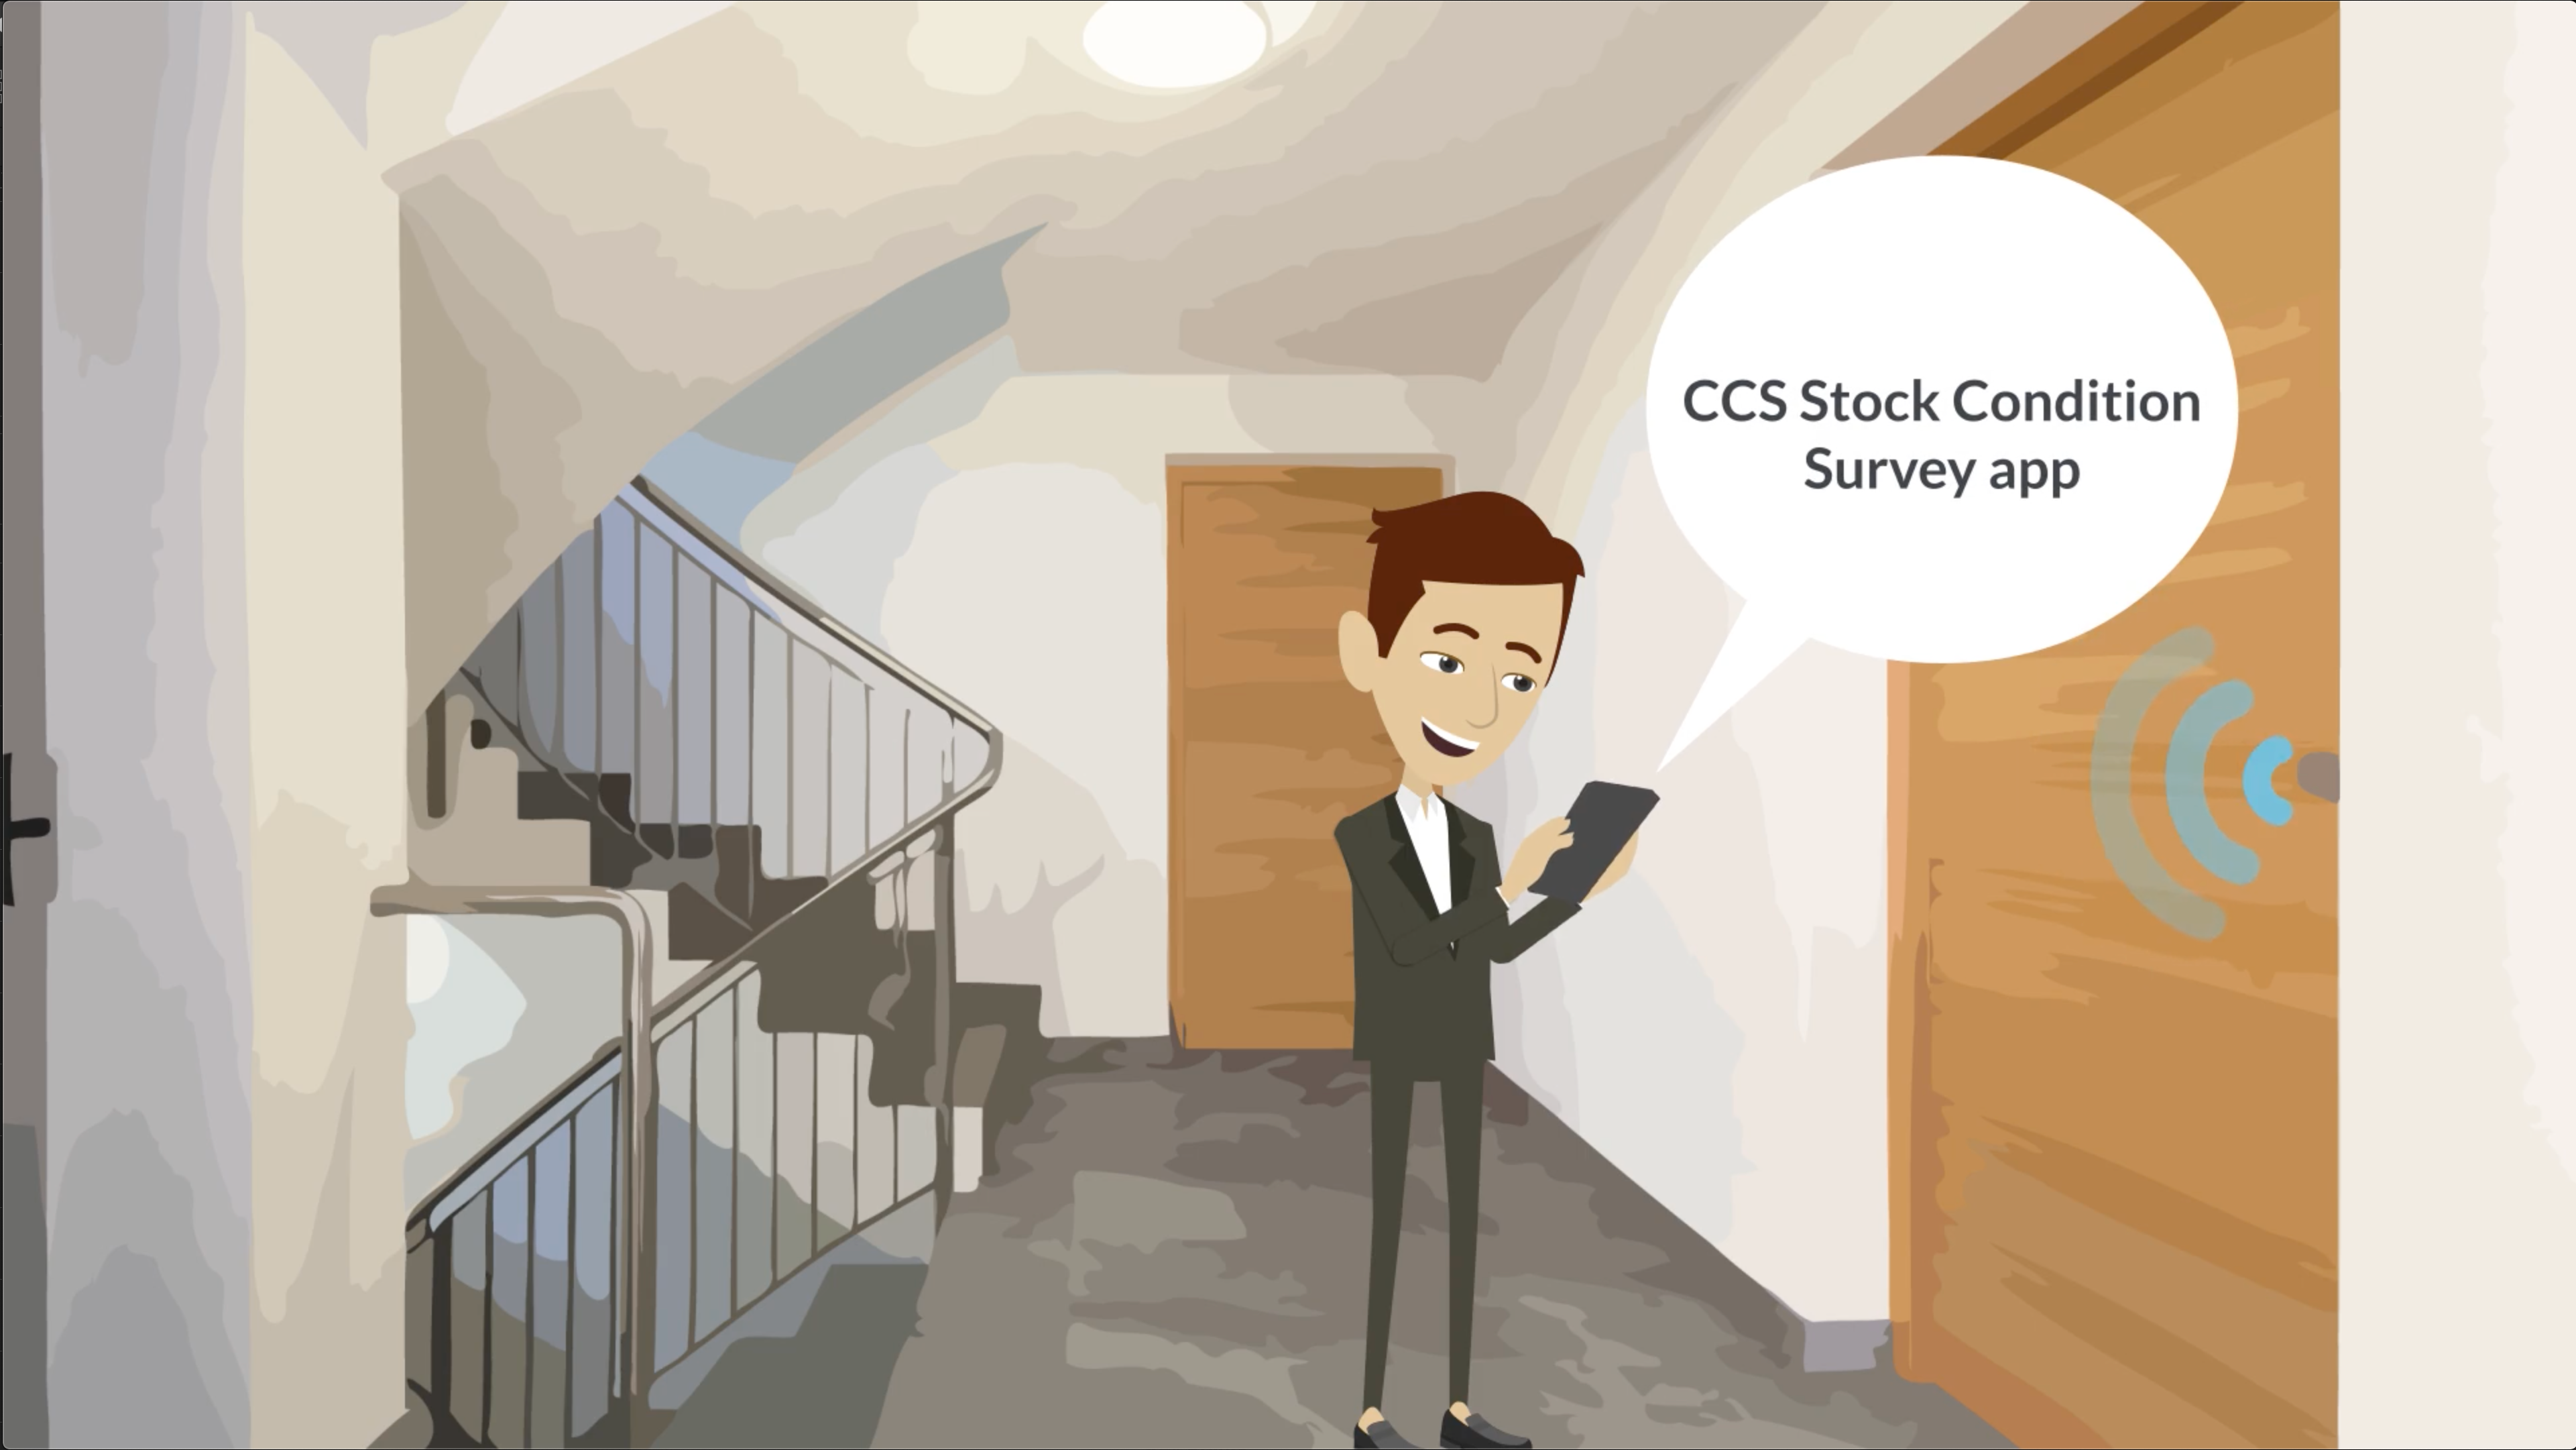 Stock Condition Survey app